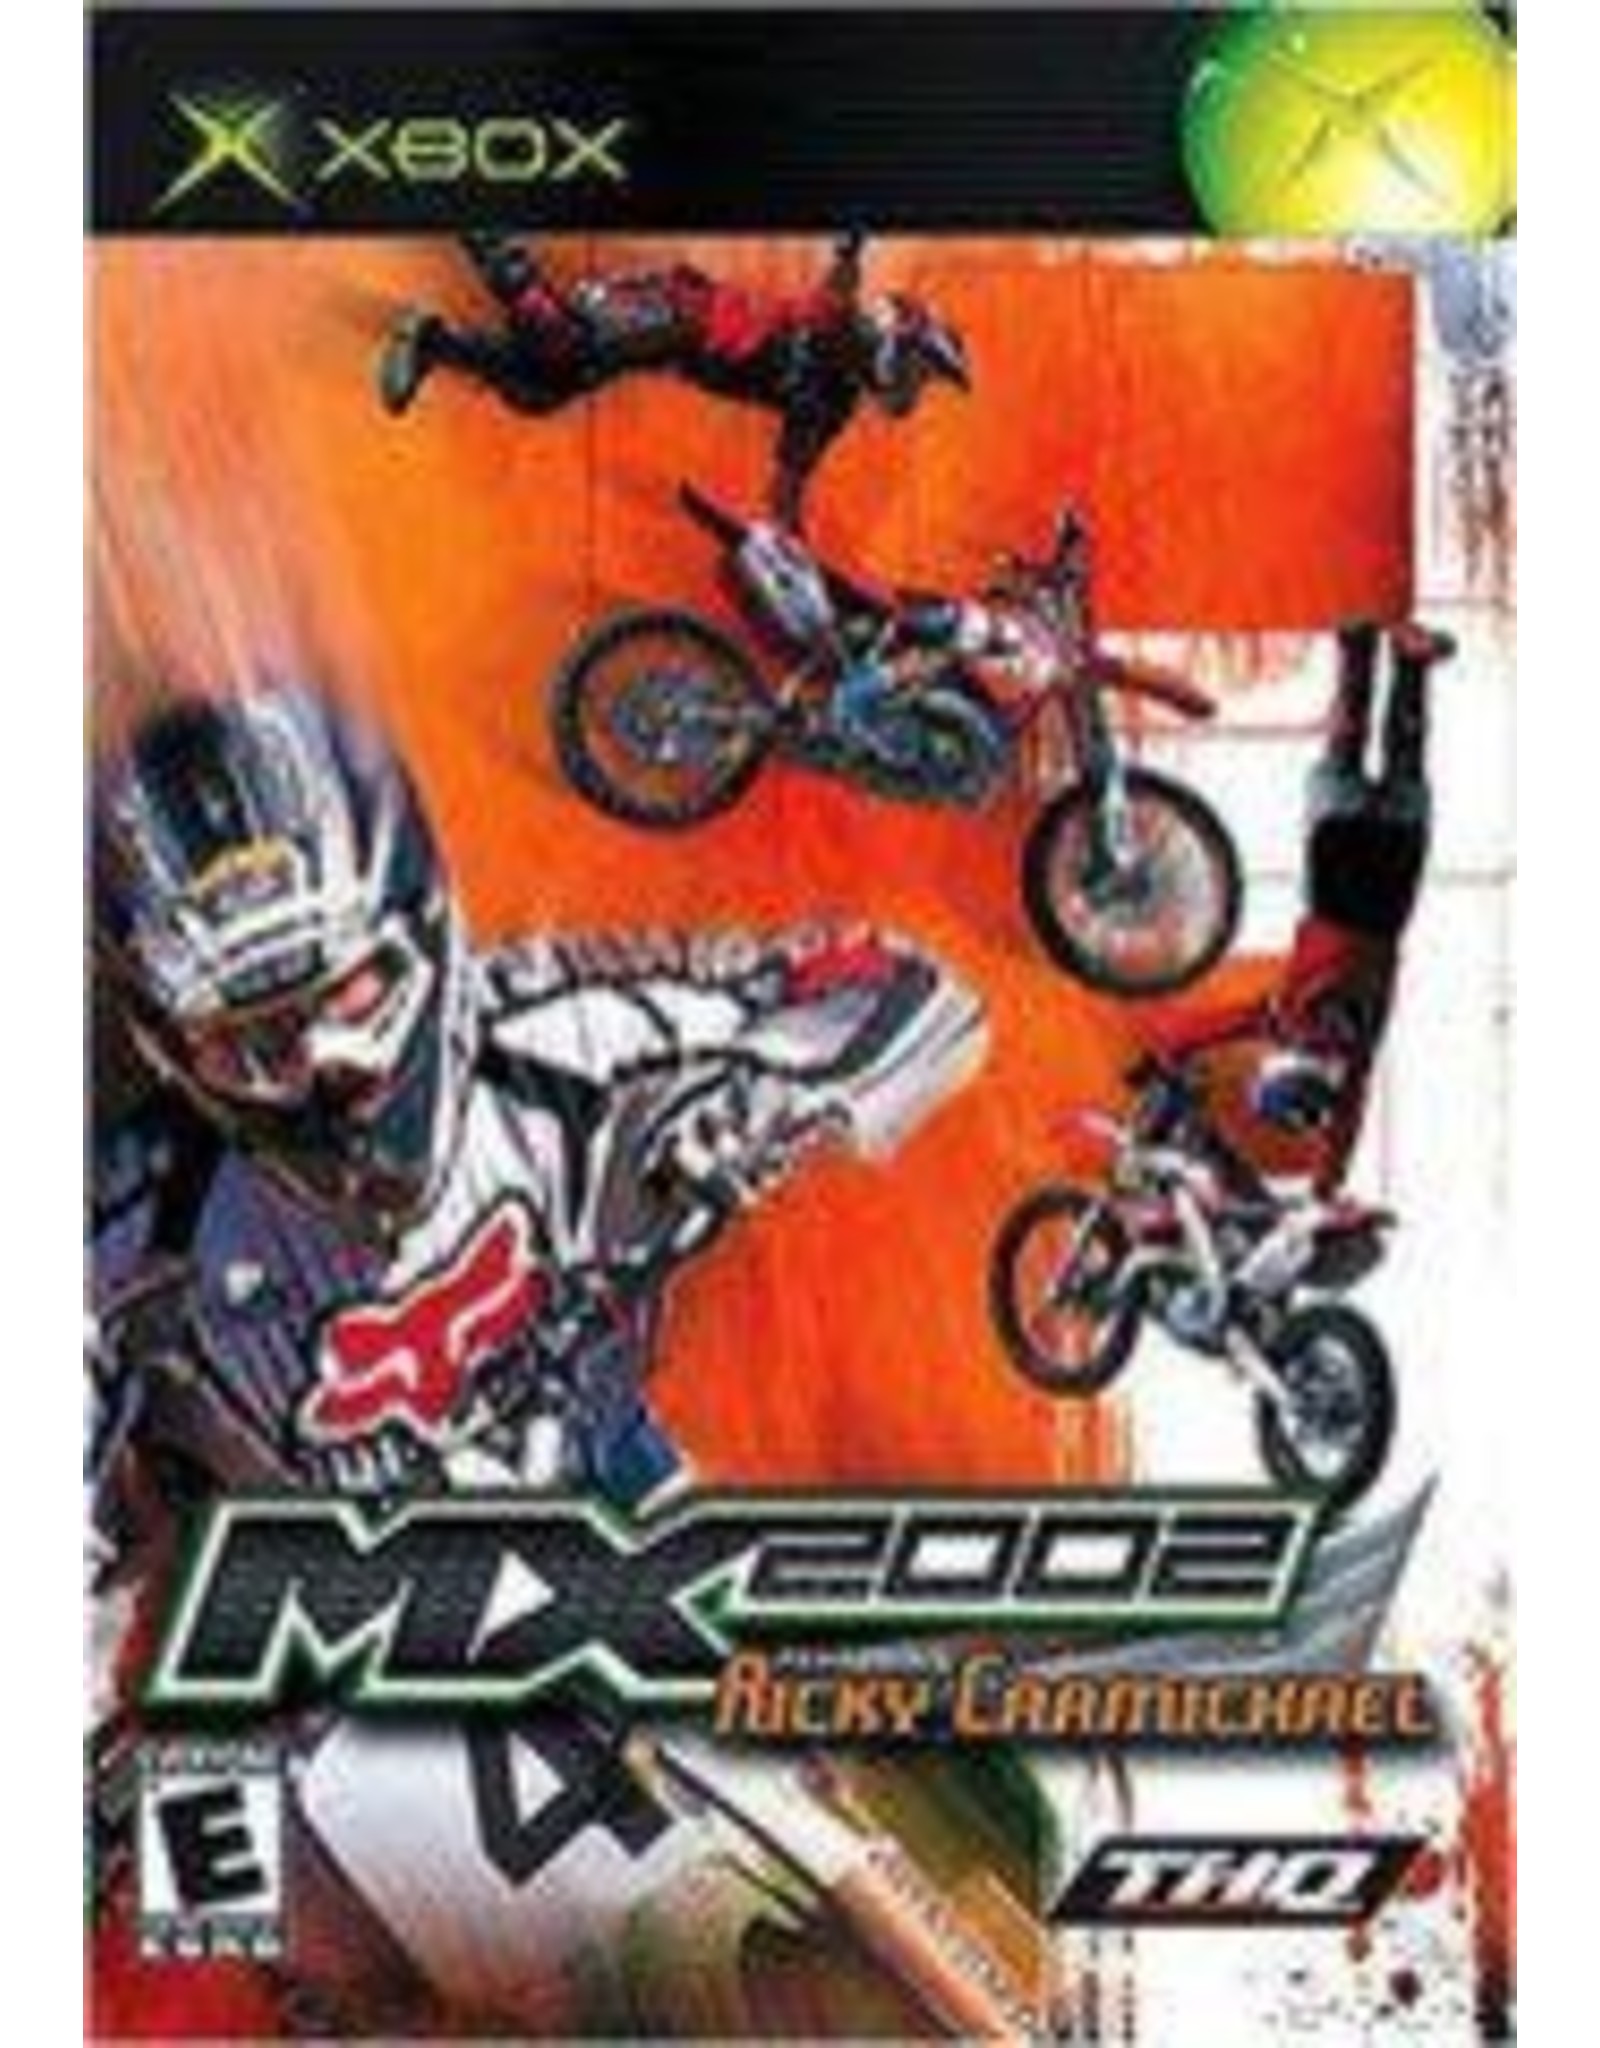 Xbox MX 2002 Featuring Ricky Carmichael (CiB)